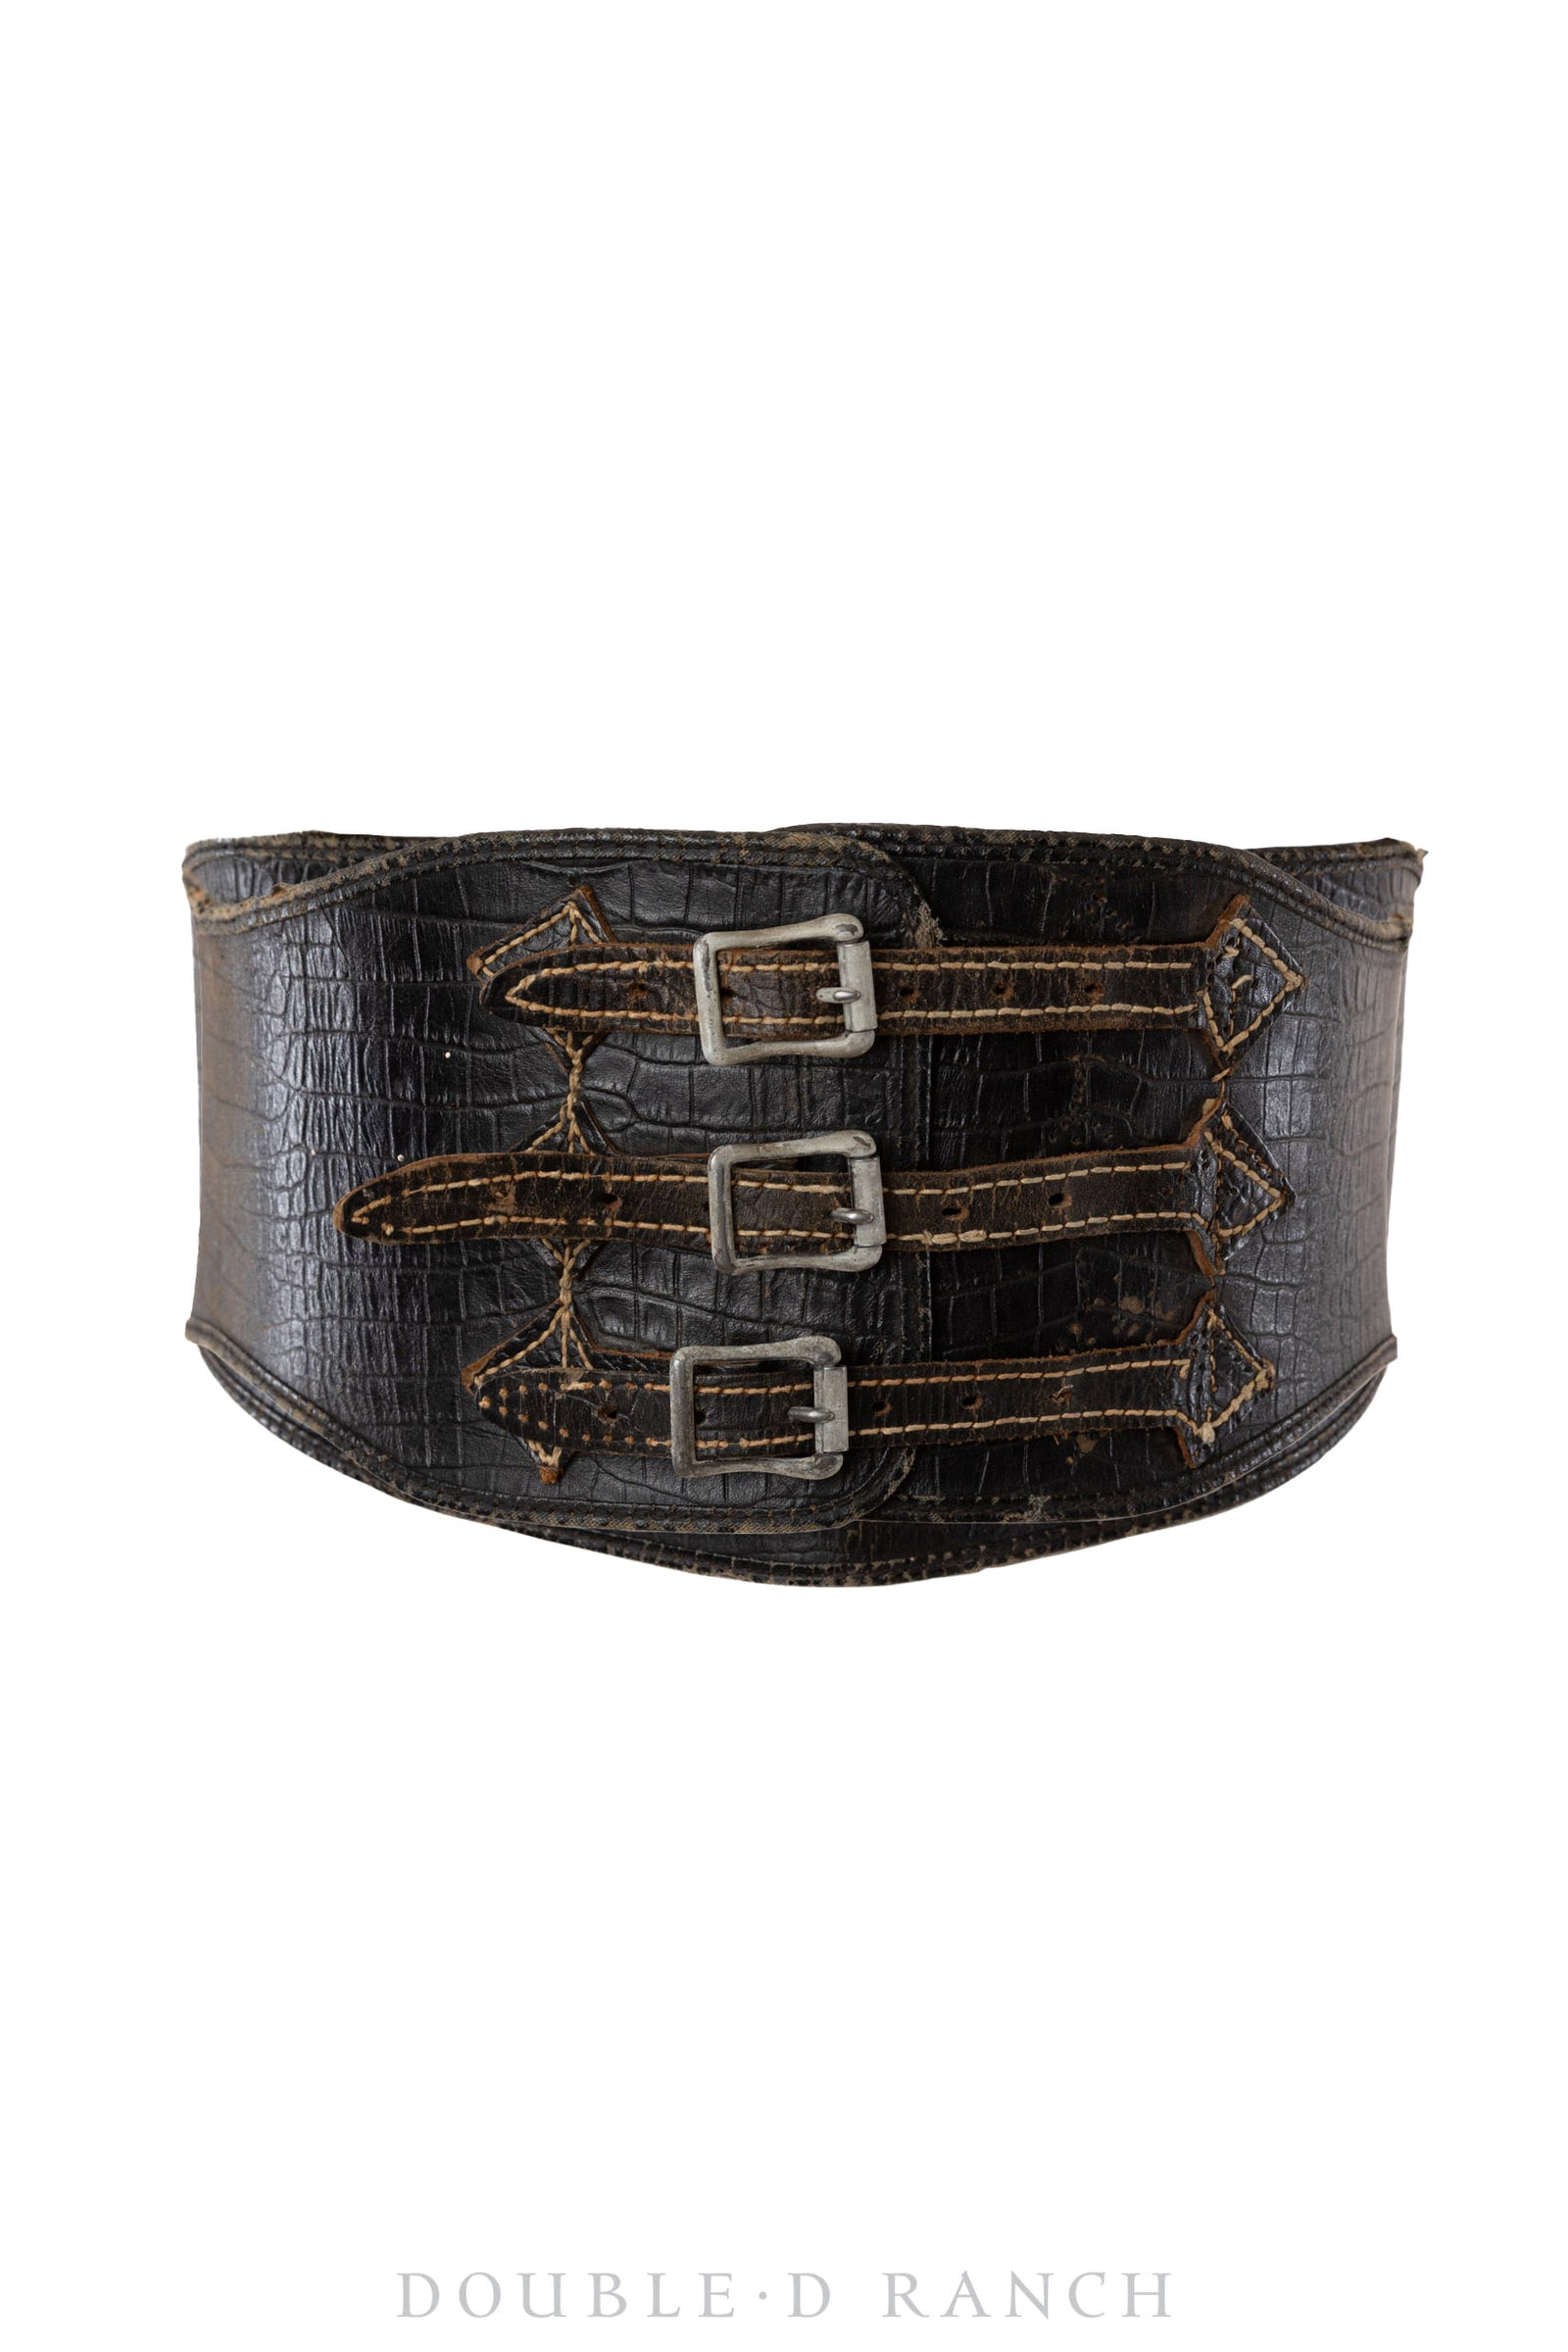 Natural Black Onyx Belt Buckle - Western Style Belt Buckle - Cowboy Belt  Buckle - Boho Belt Buckle